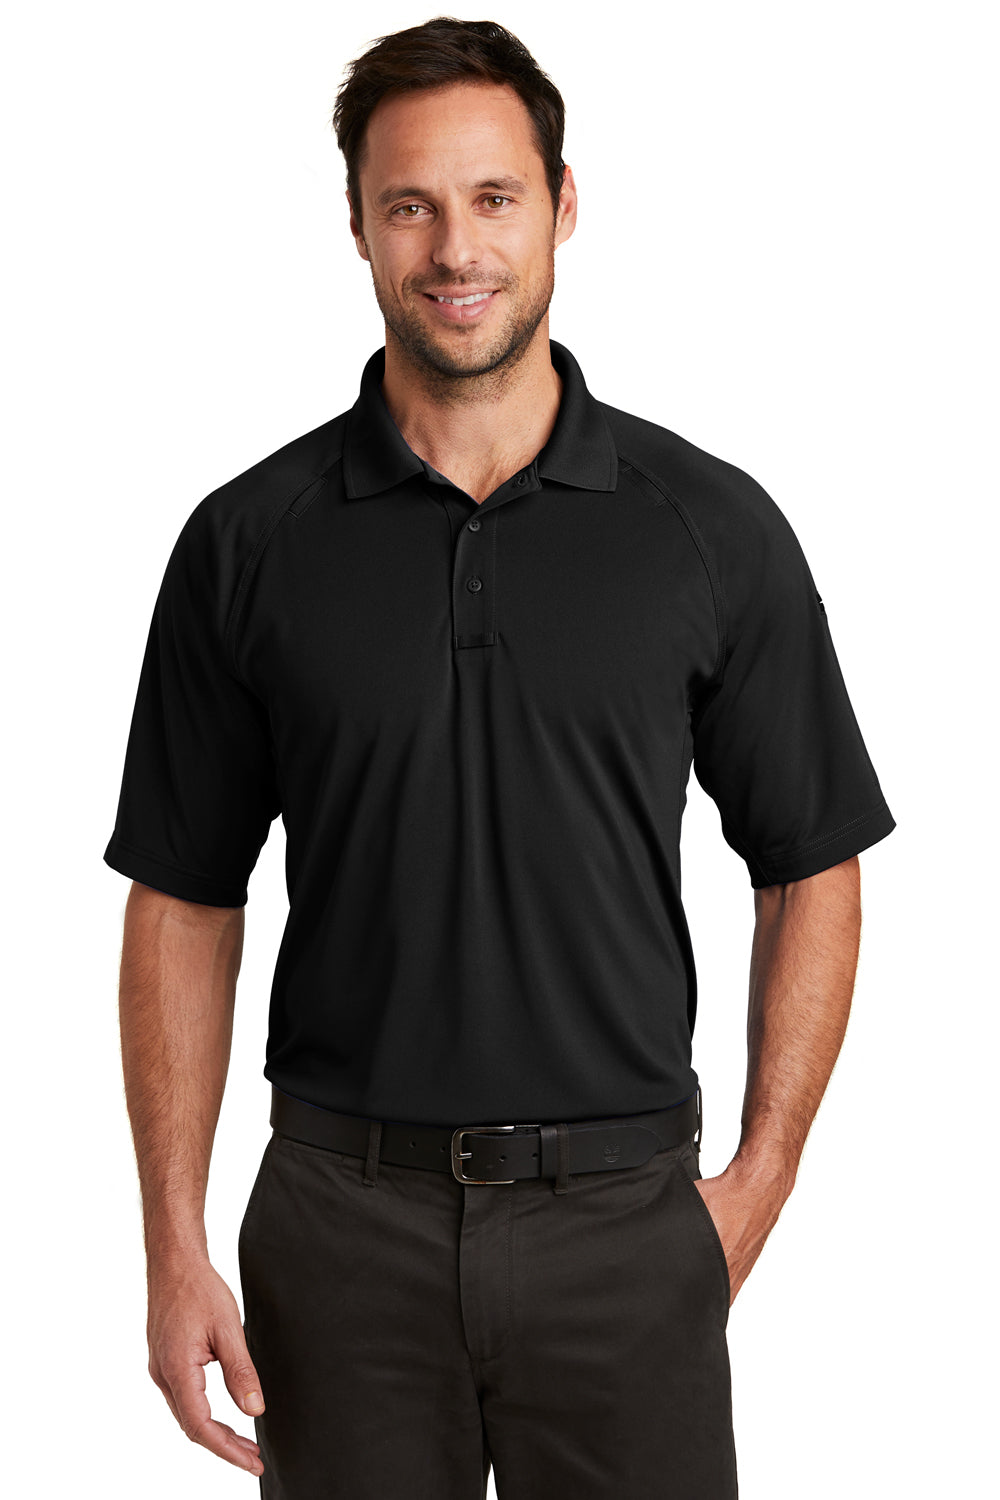 CornerStone CS420 Mens Select Tactical Moisture Wicking Short Sleeve Polo Shirt Black Front